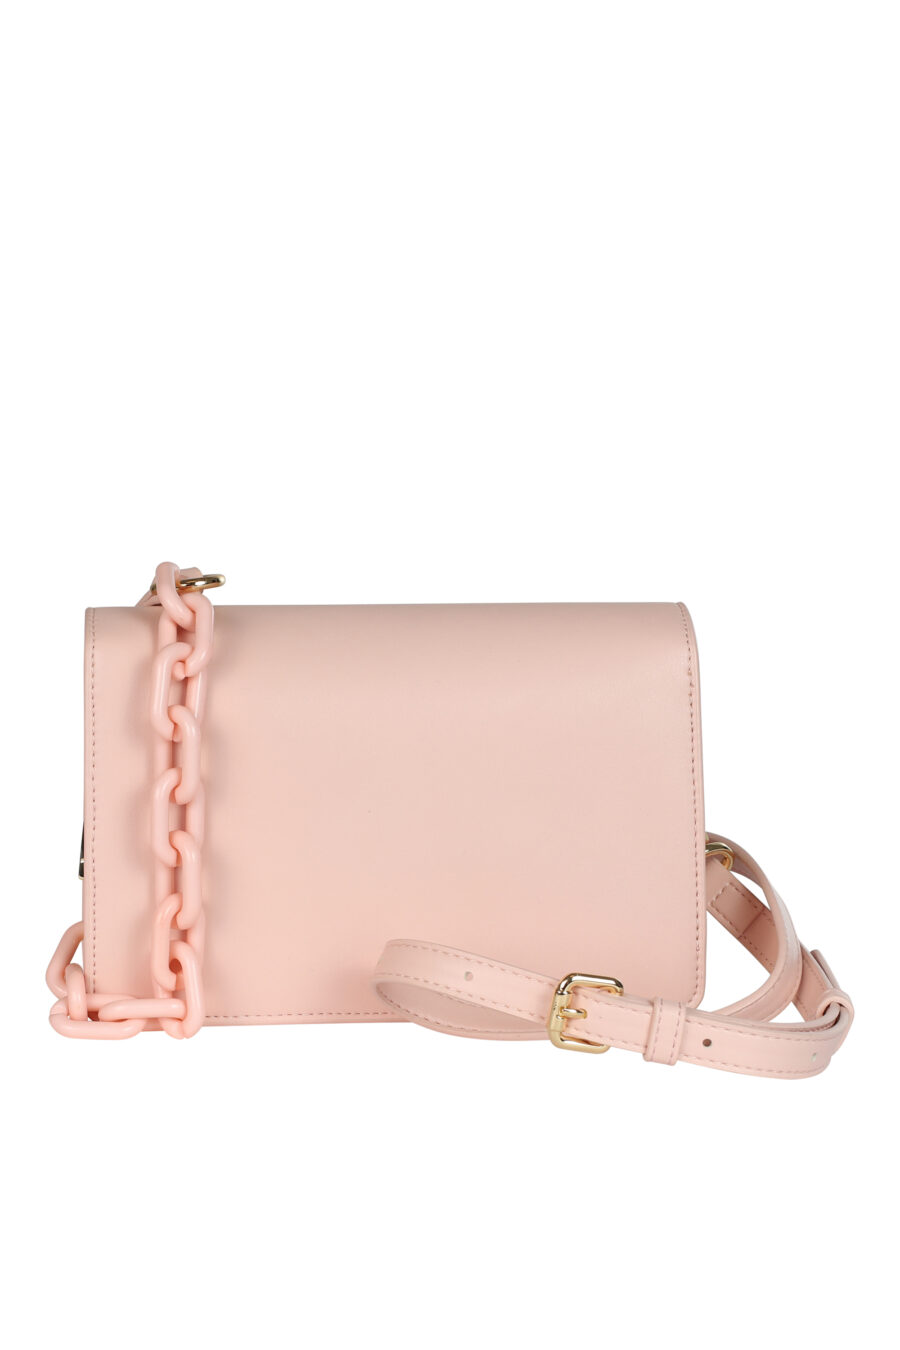 Pastel pink shoulder bag with eye lock and metal star - 8052672427700 3